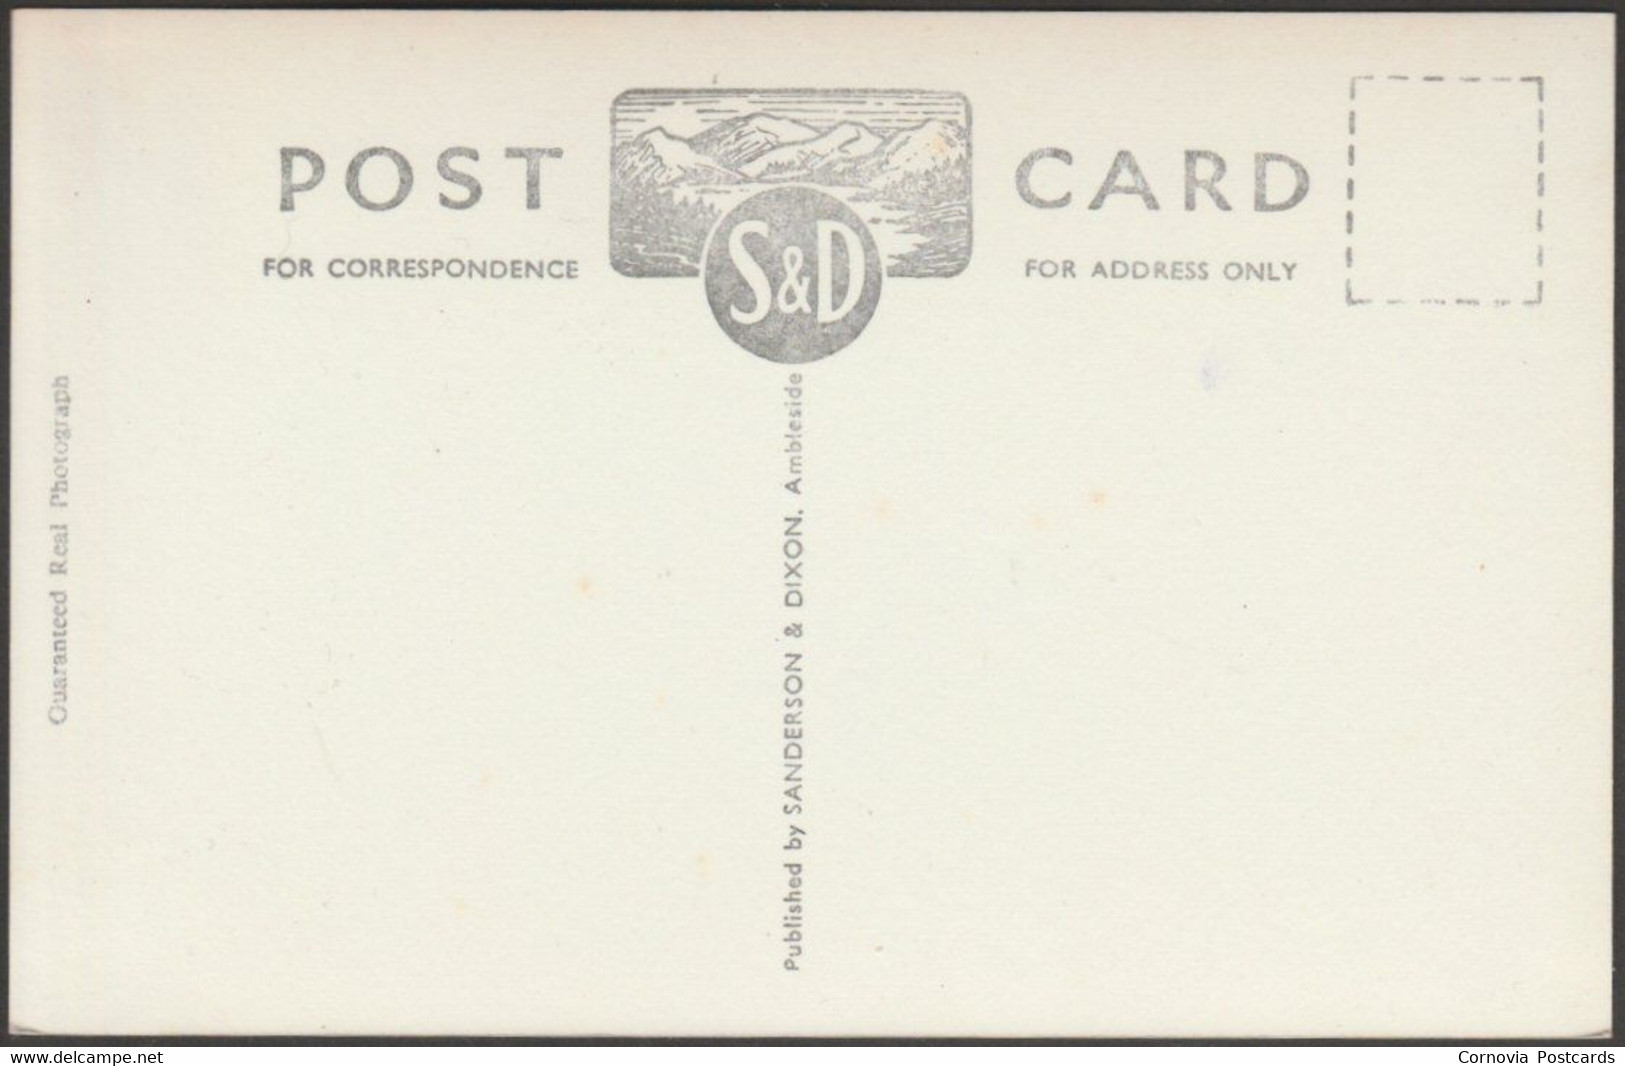 Ambleside From Lowfold, Westmorland, C.1950 - Sanderson & Dixon RP Postcard - Ambleside